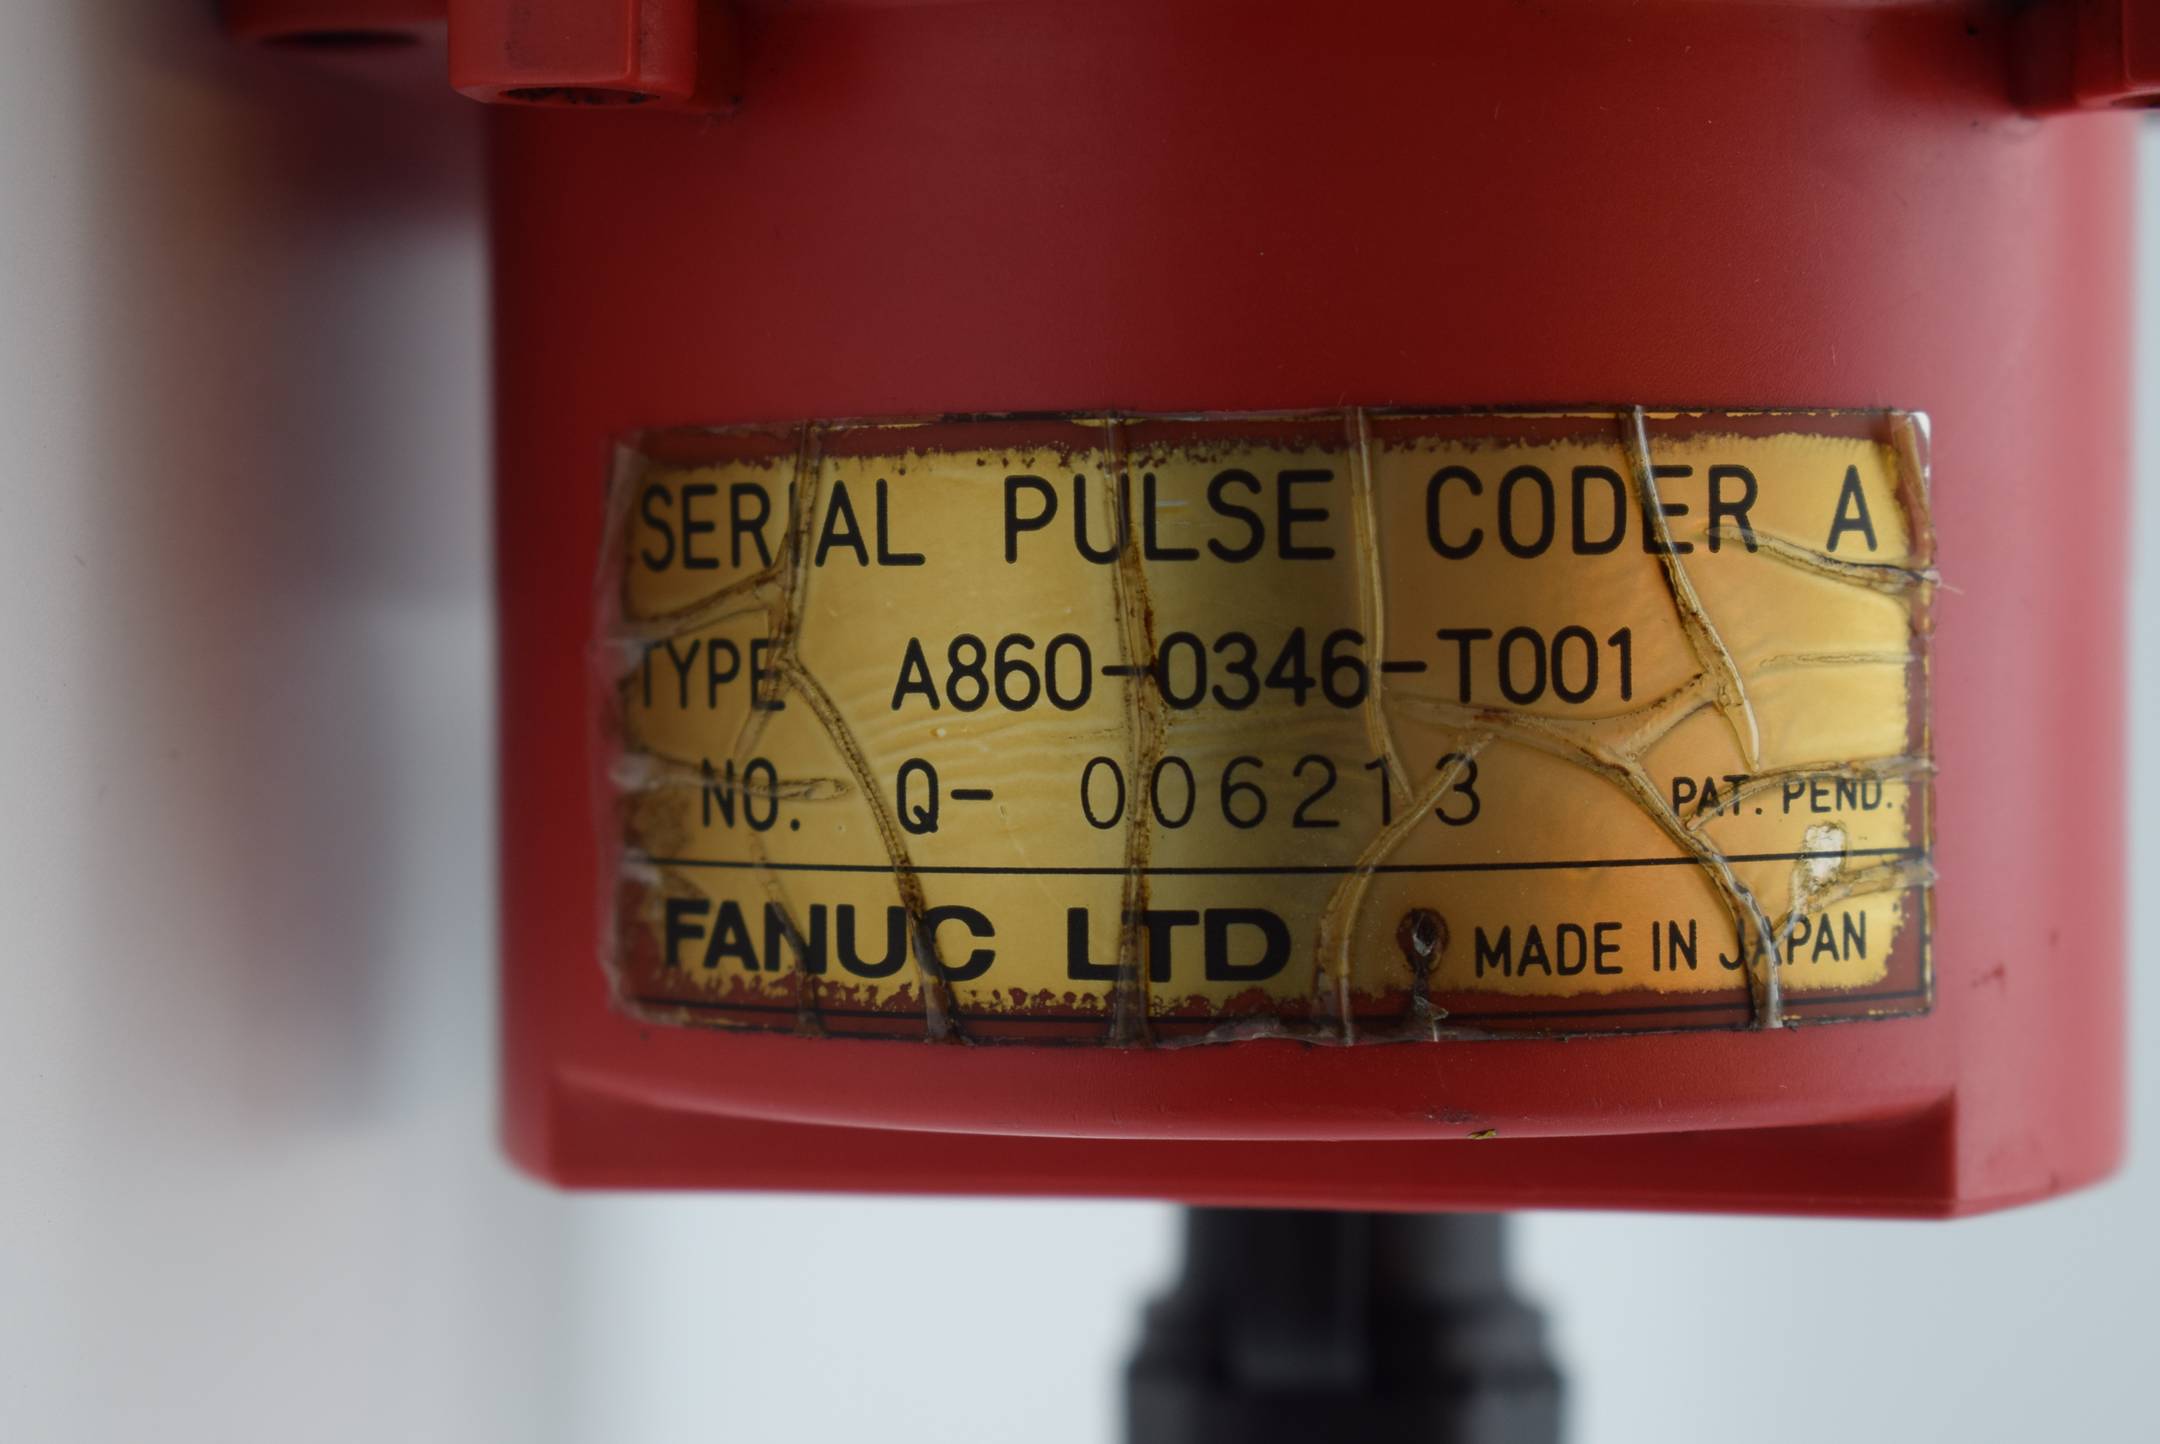 Fanuc Motor + Serial Pulse Coder A860-0346-T001